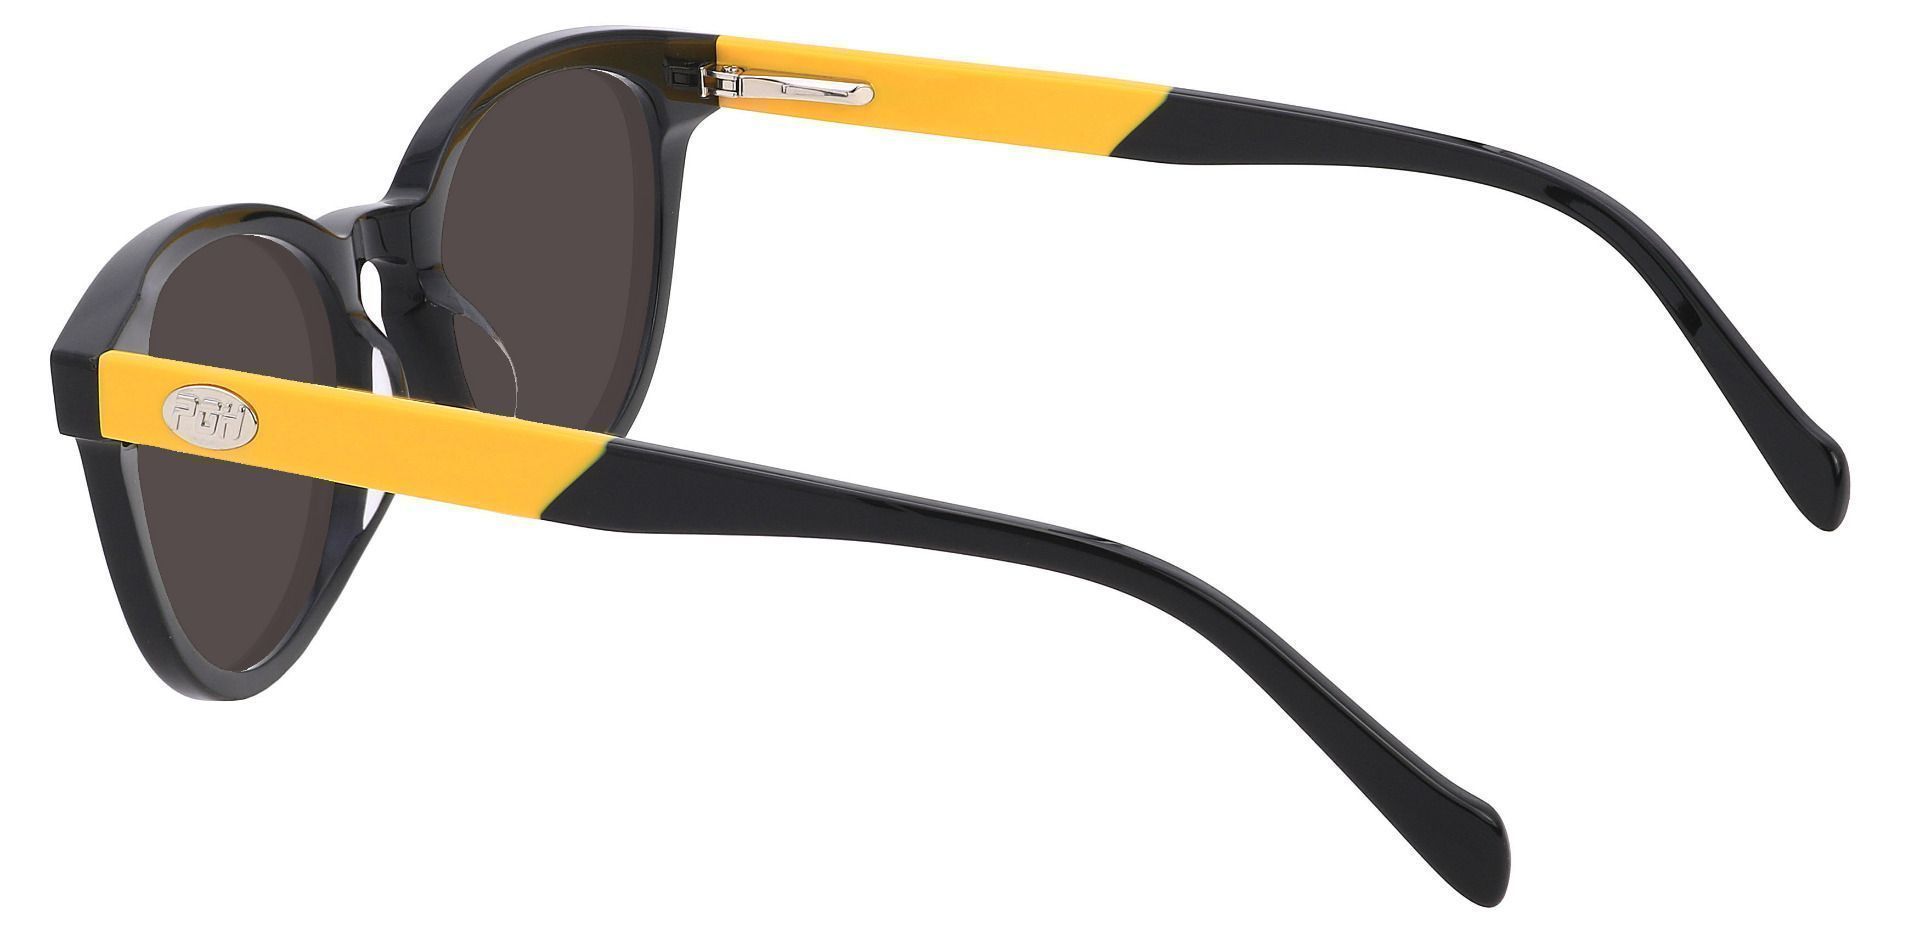 Forbes Oval Prescription Sunglasses - Black Frame With Gray Lenses